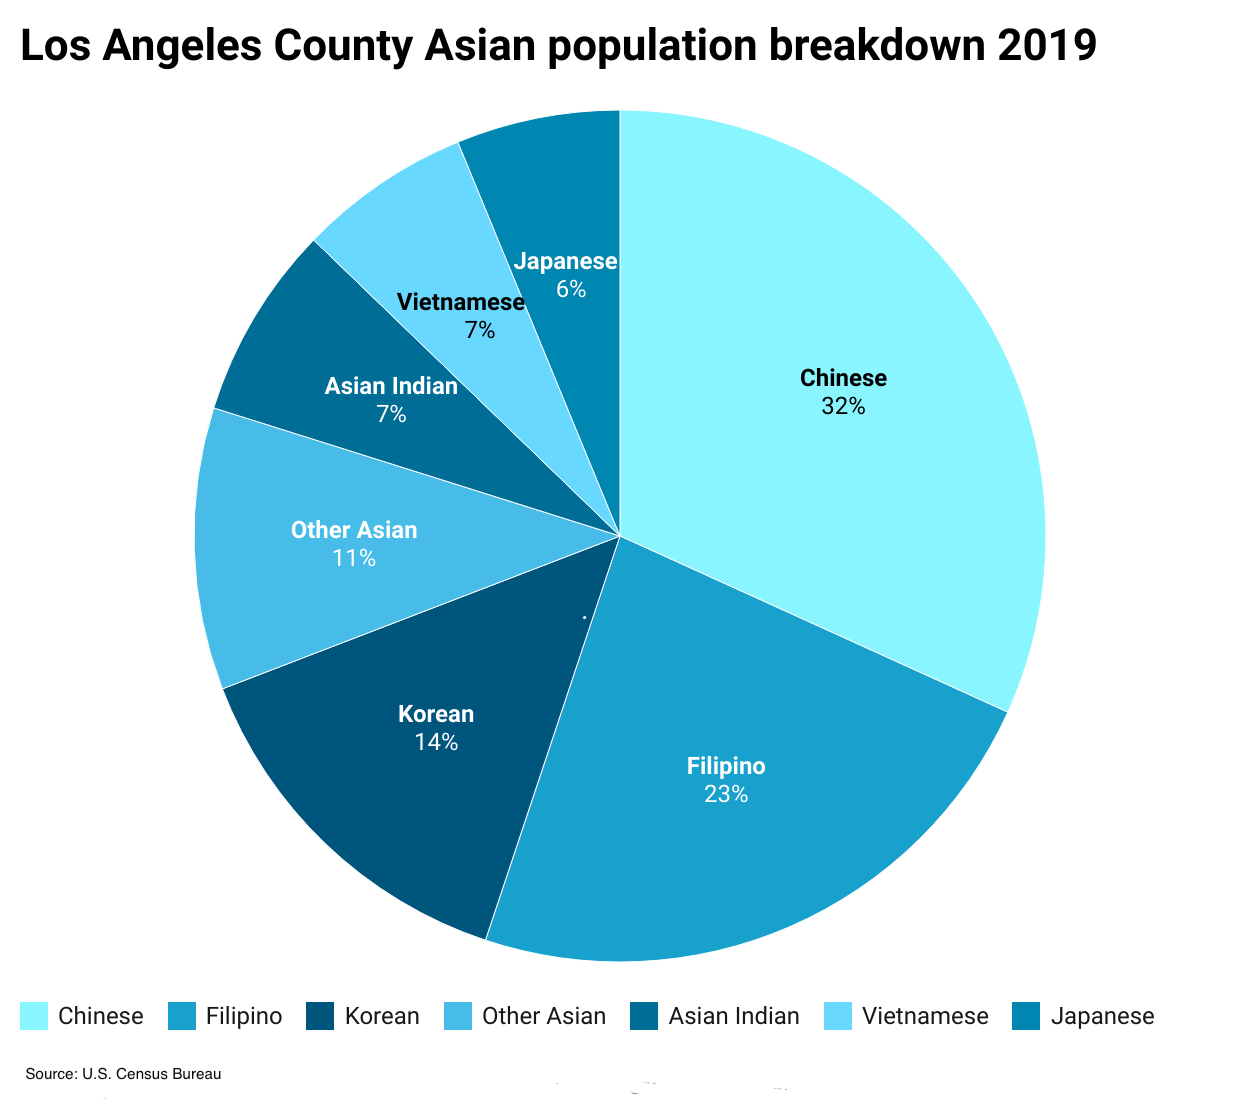 Breakdown of Los Angeles Asian population 2019